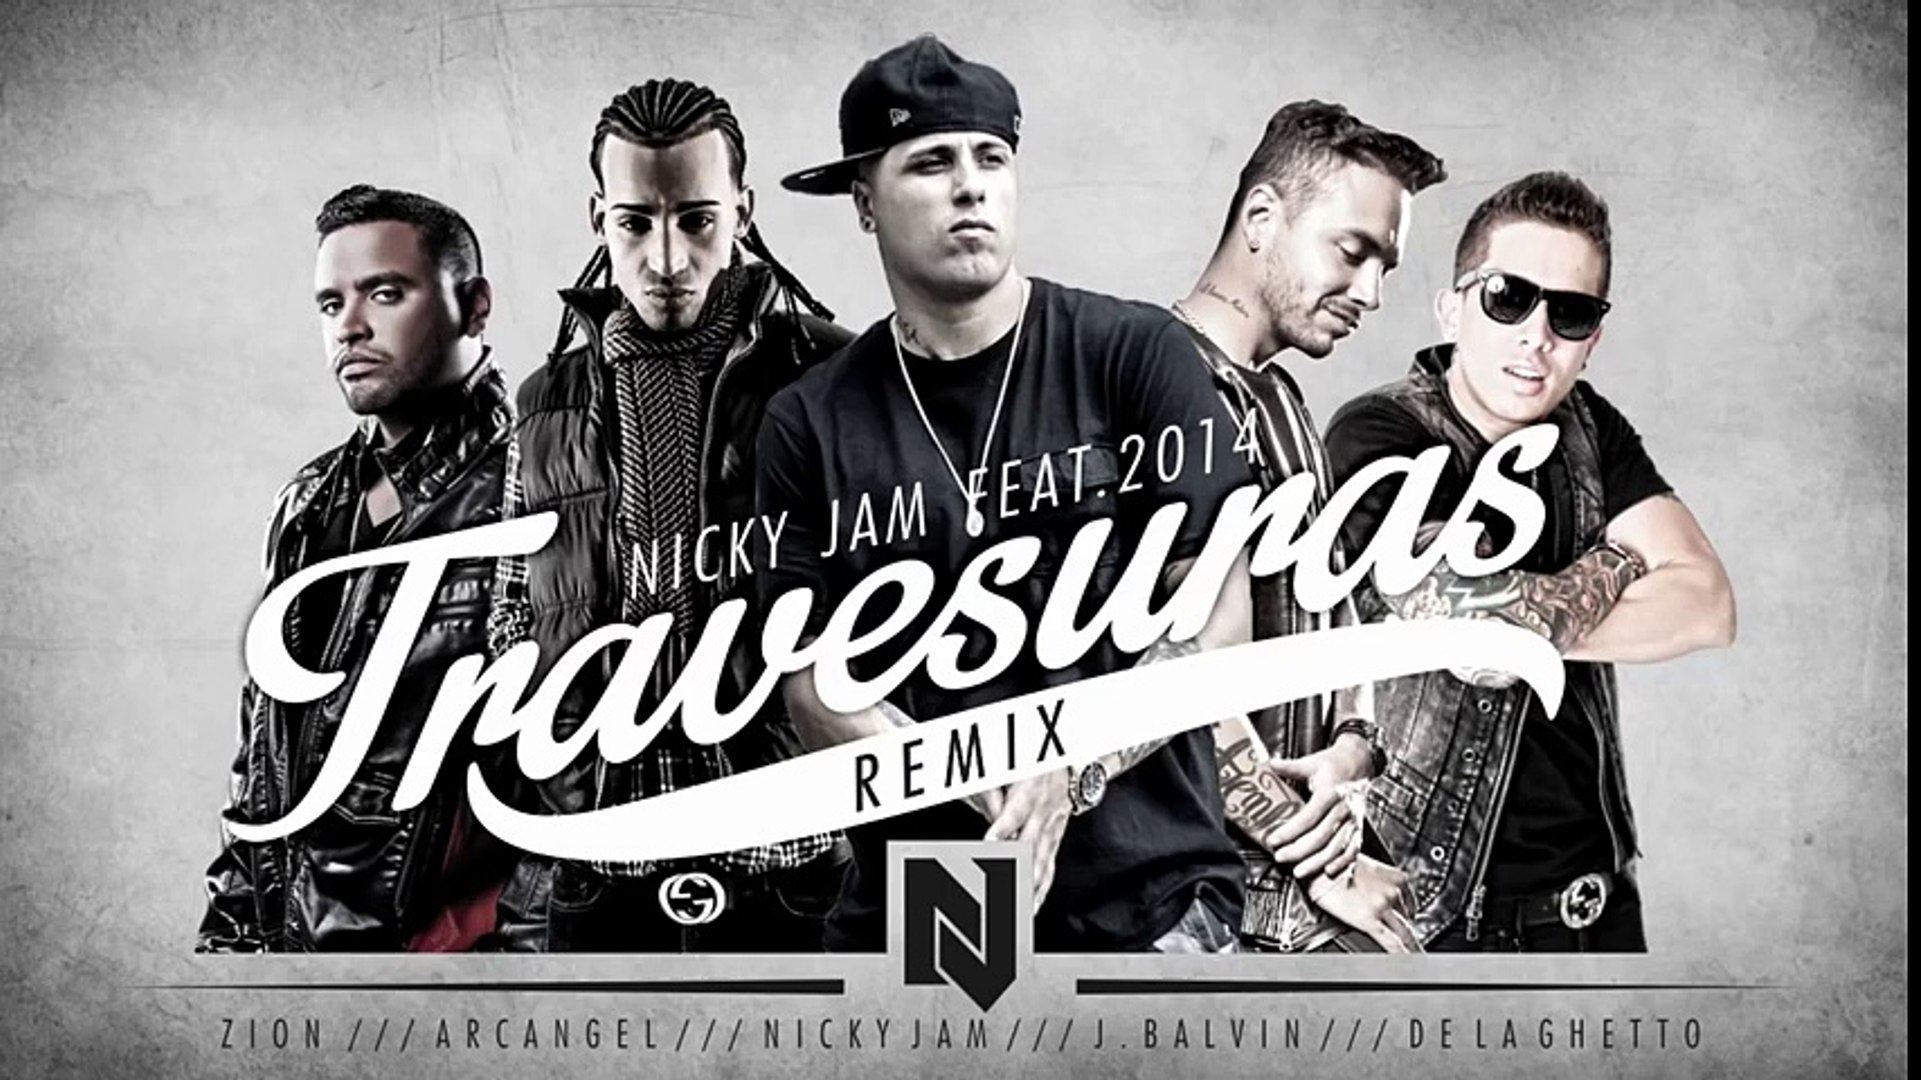 Travesuras Remix - Nicky Jam Ft De La Ghetto, J balvin, Zion y Arcangel -  Video Lyric - video Dailymotion